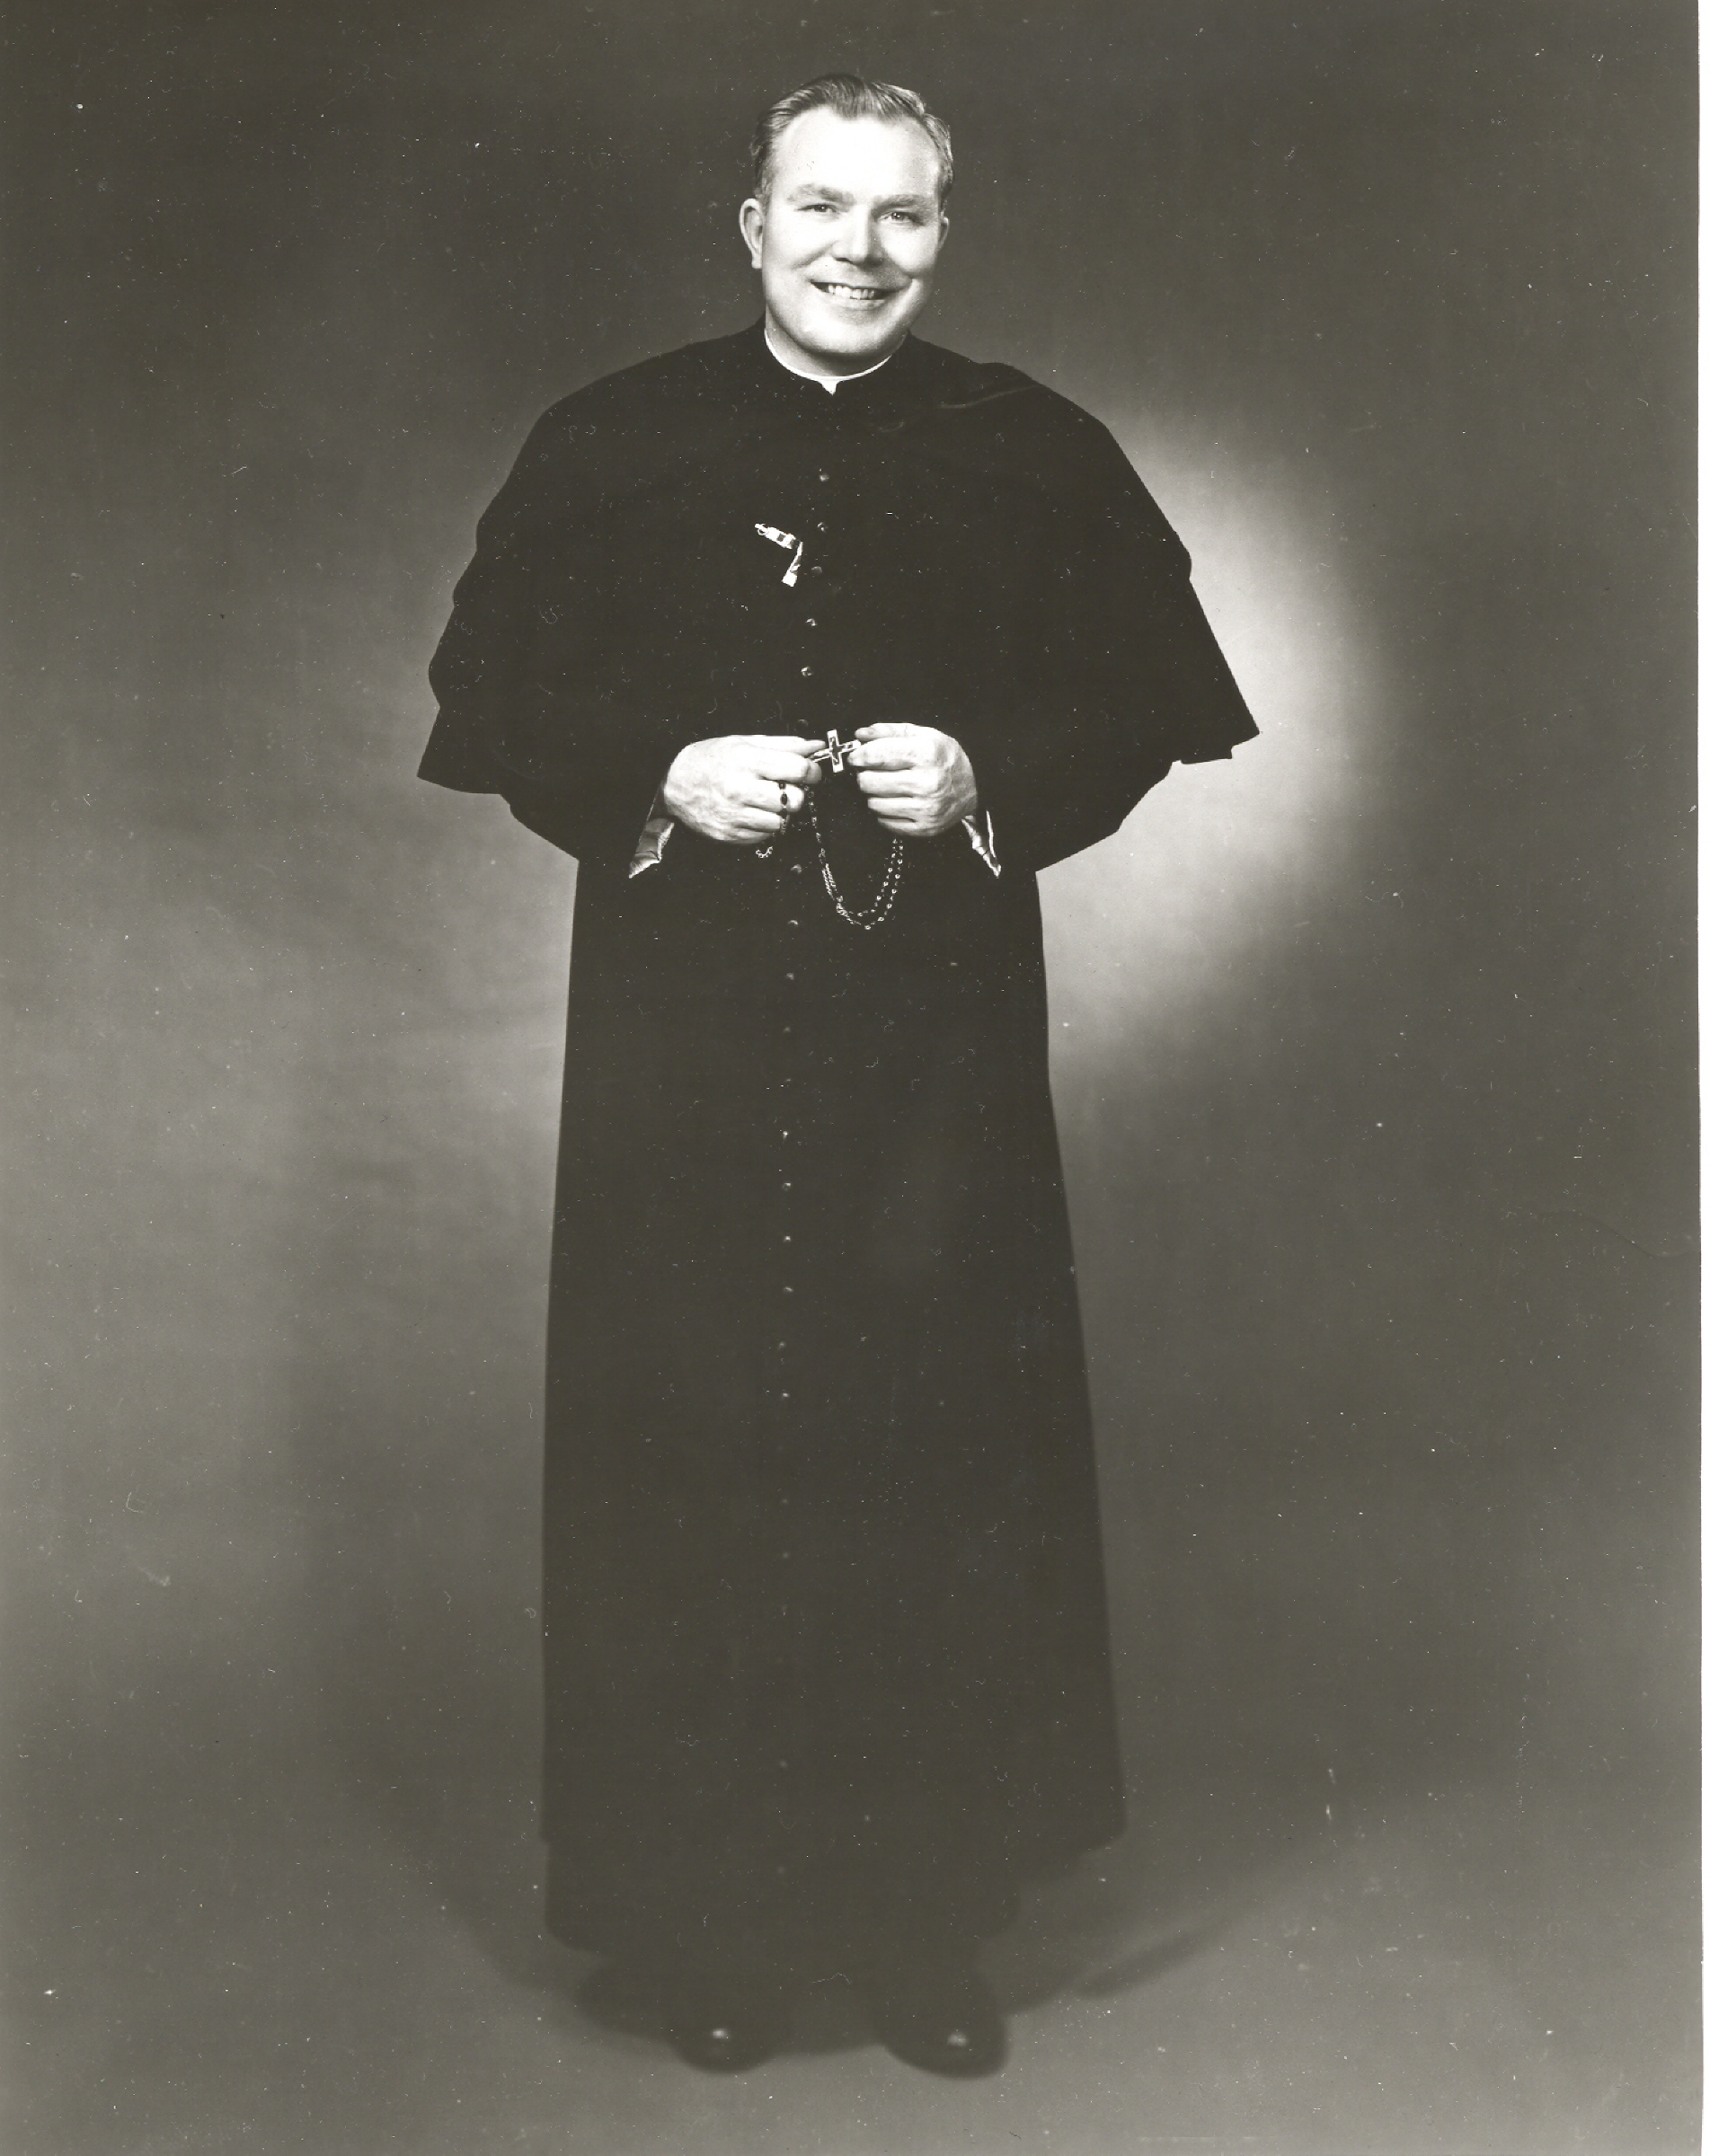 Fr. Patrick Peyton, C.S.C., in the 1940s